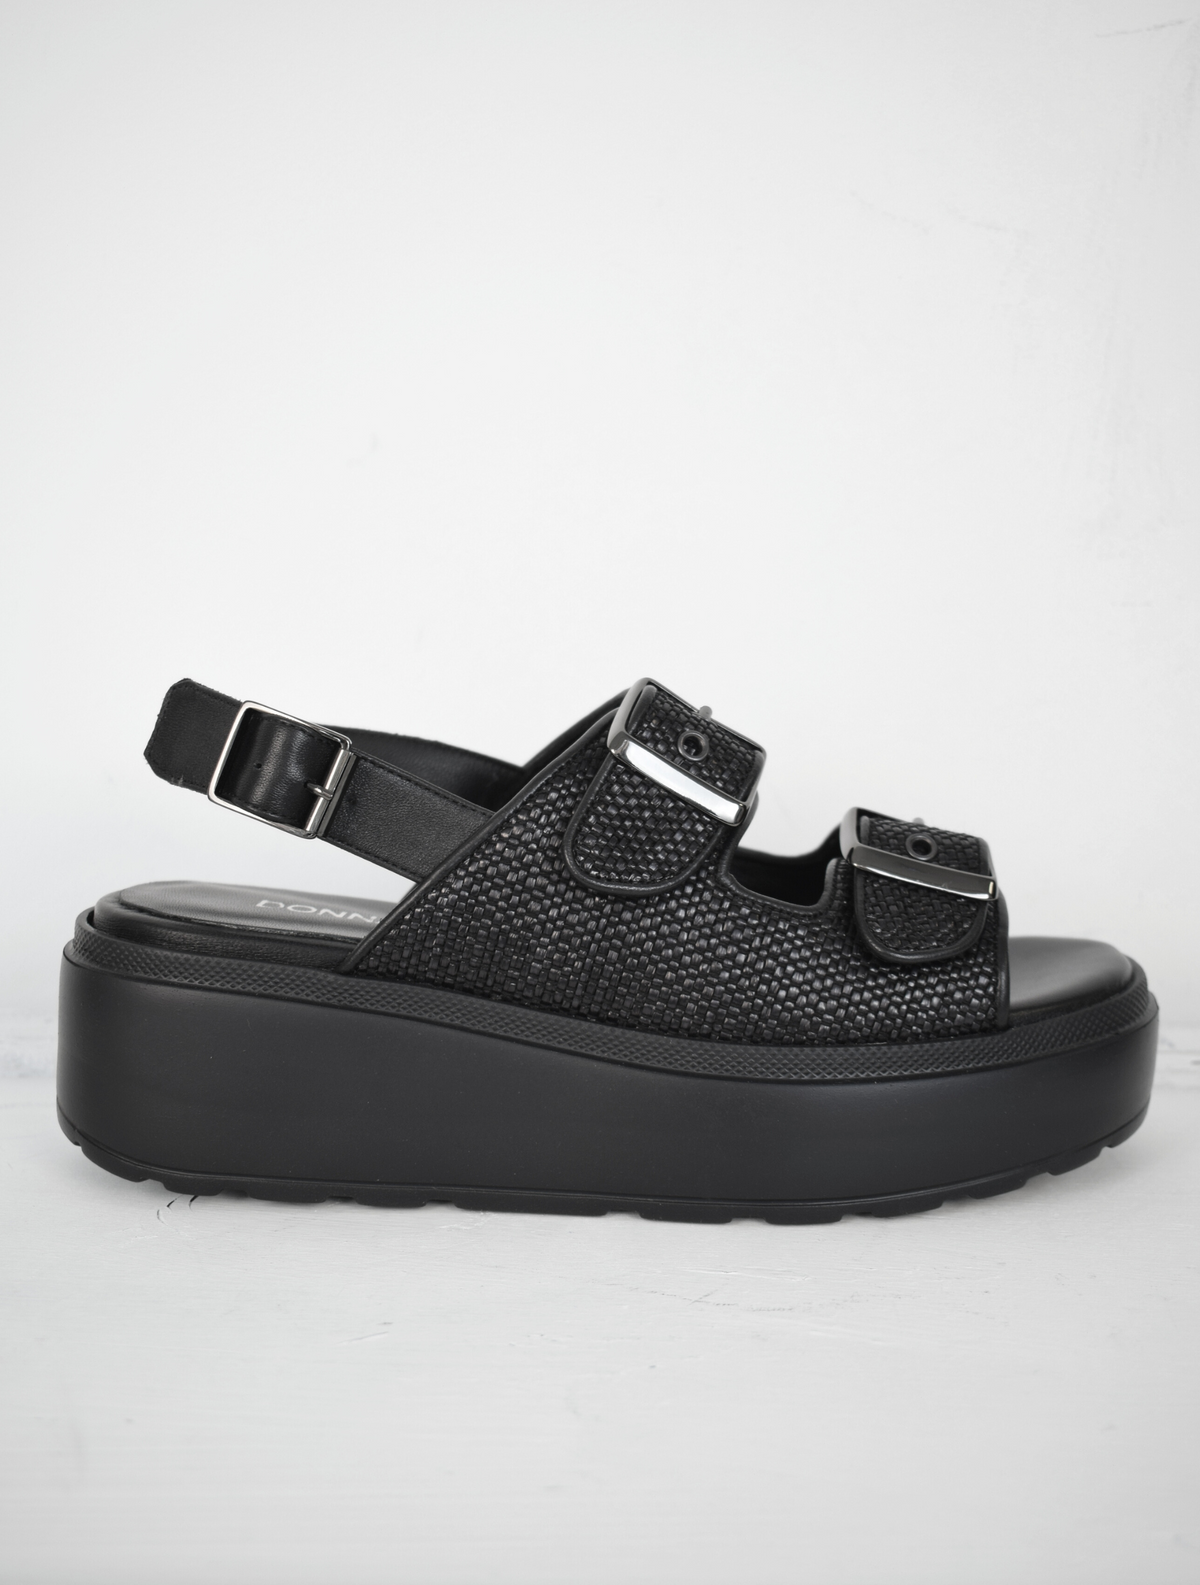 black raffia sandals with strap across back 